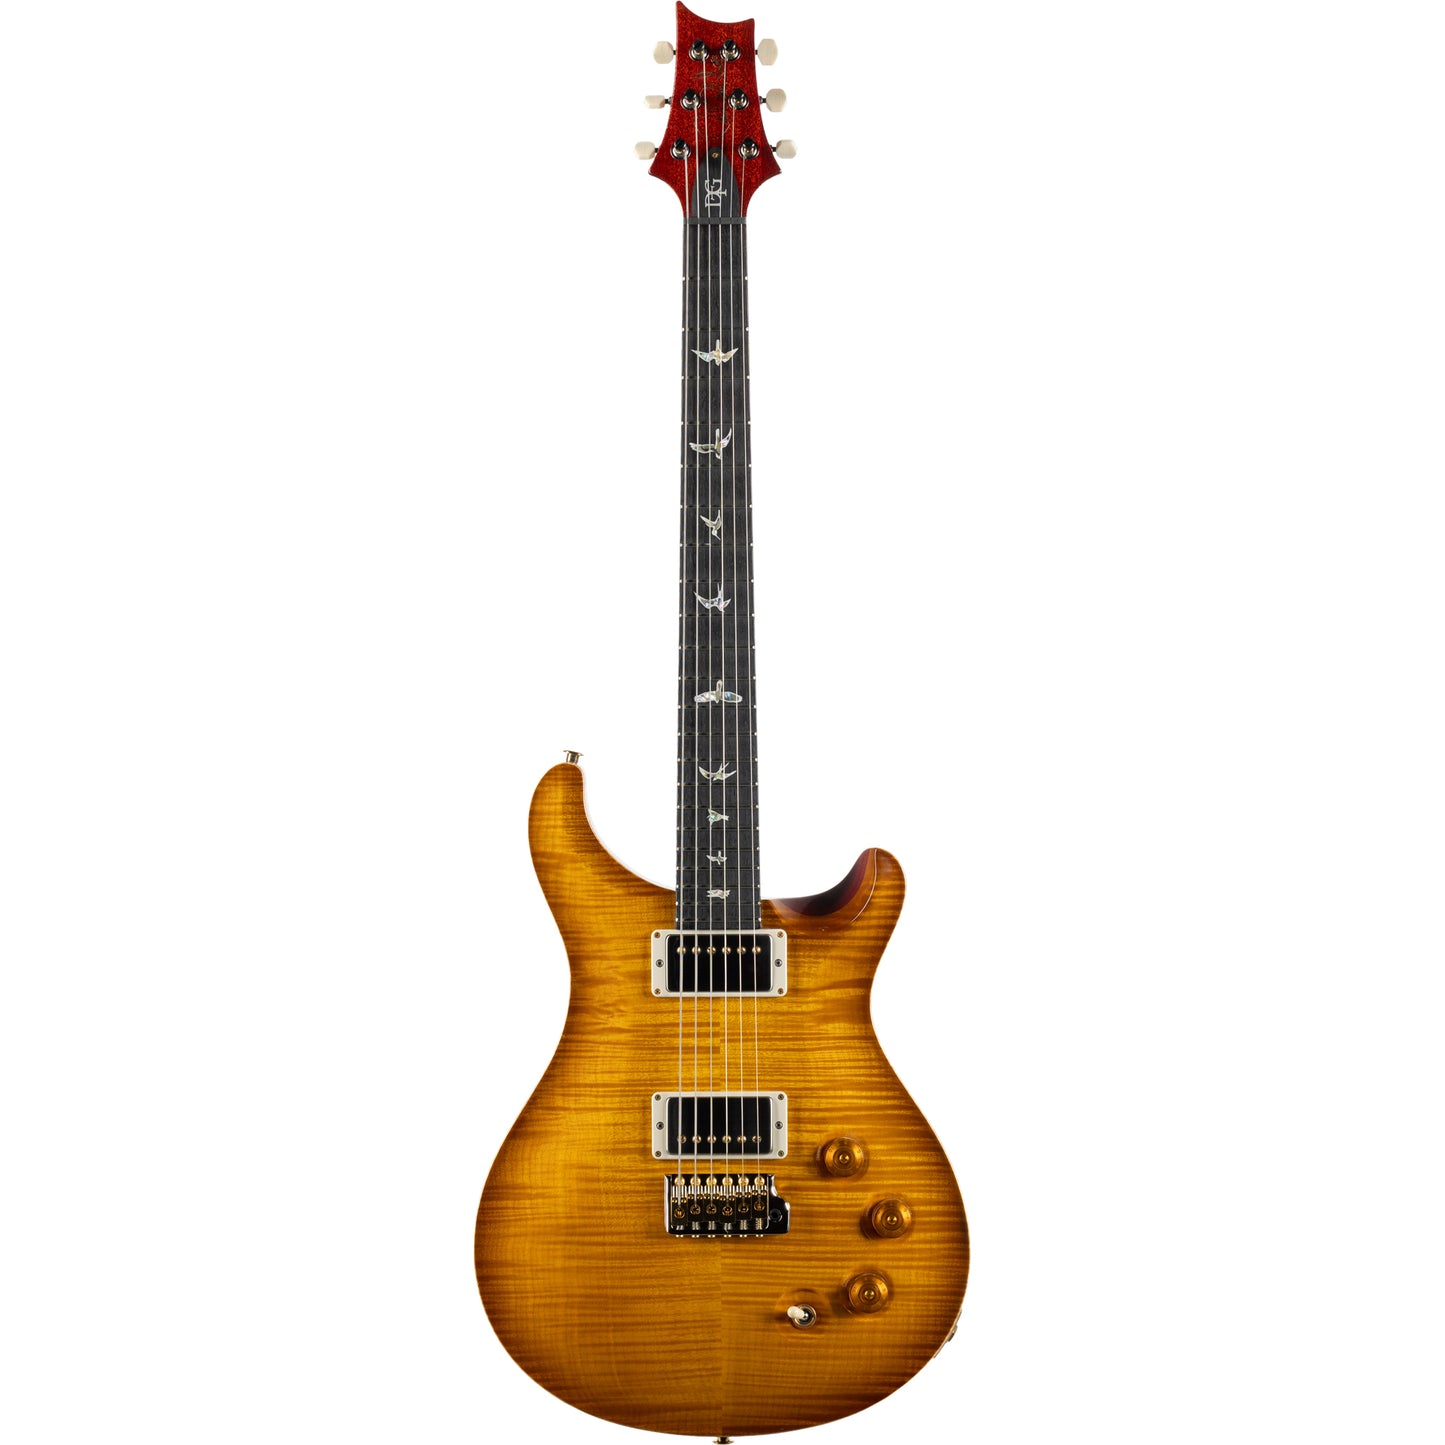 PRS DGT David Grissom 10 Top Electric Guitar - McCarty Sunburst